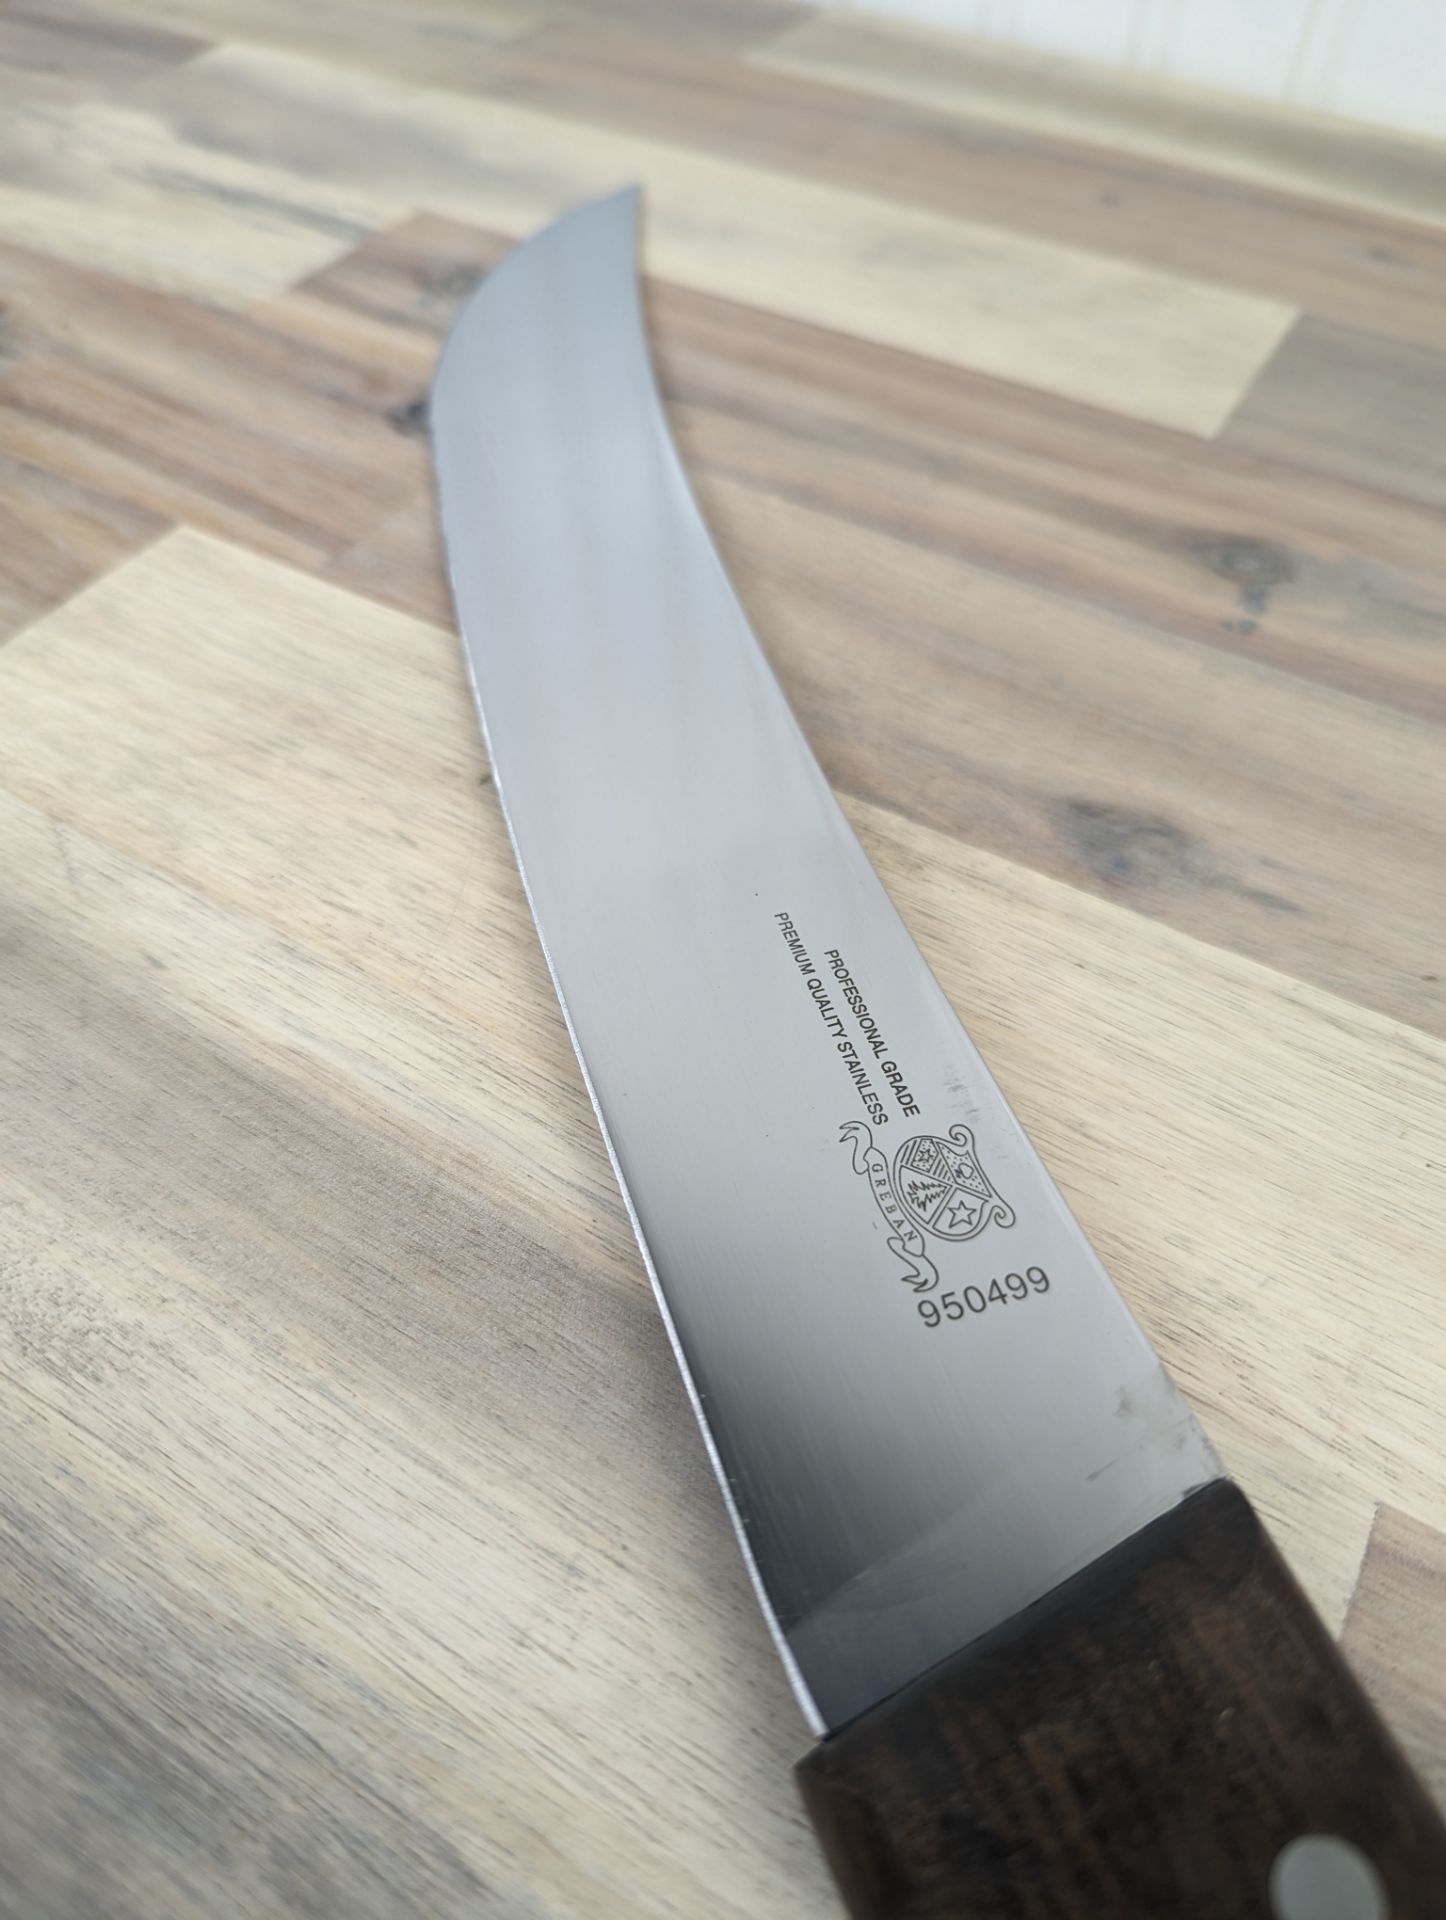 12" STEAK KNIFE ROSEWOOD HANDLE, OMCAN 17636 - Image 2 of 2